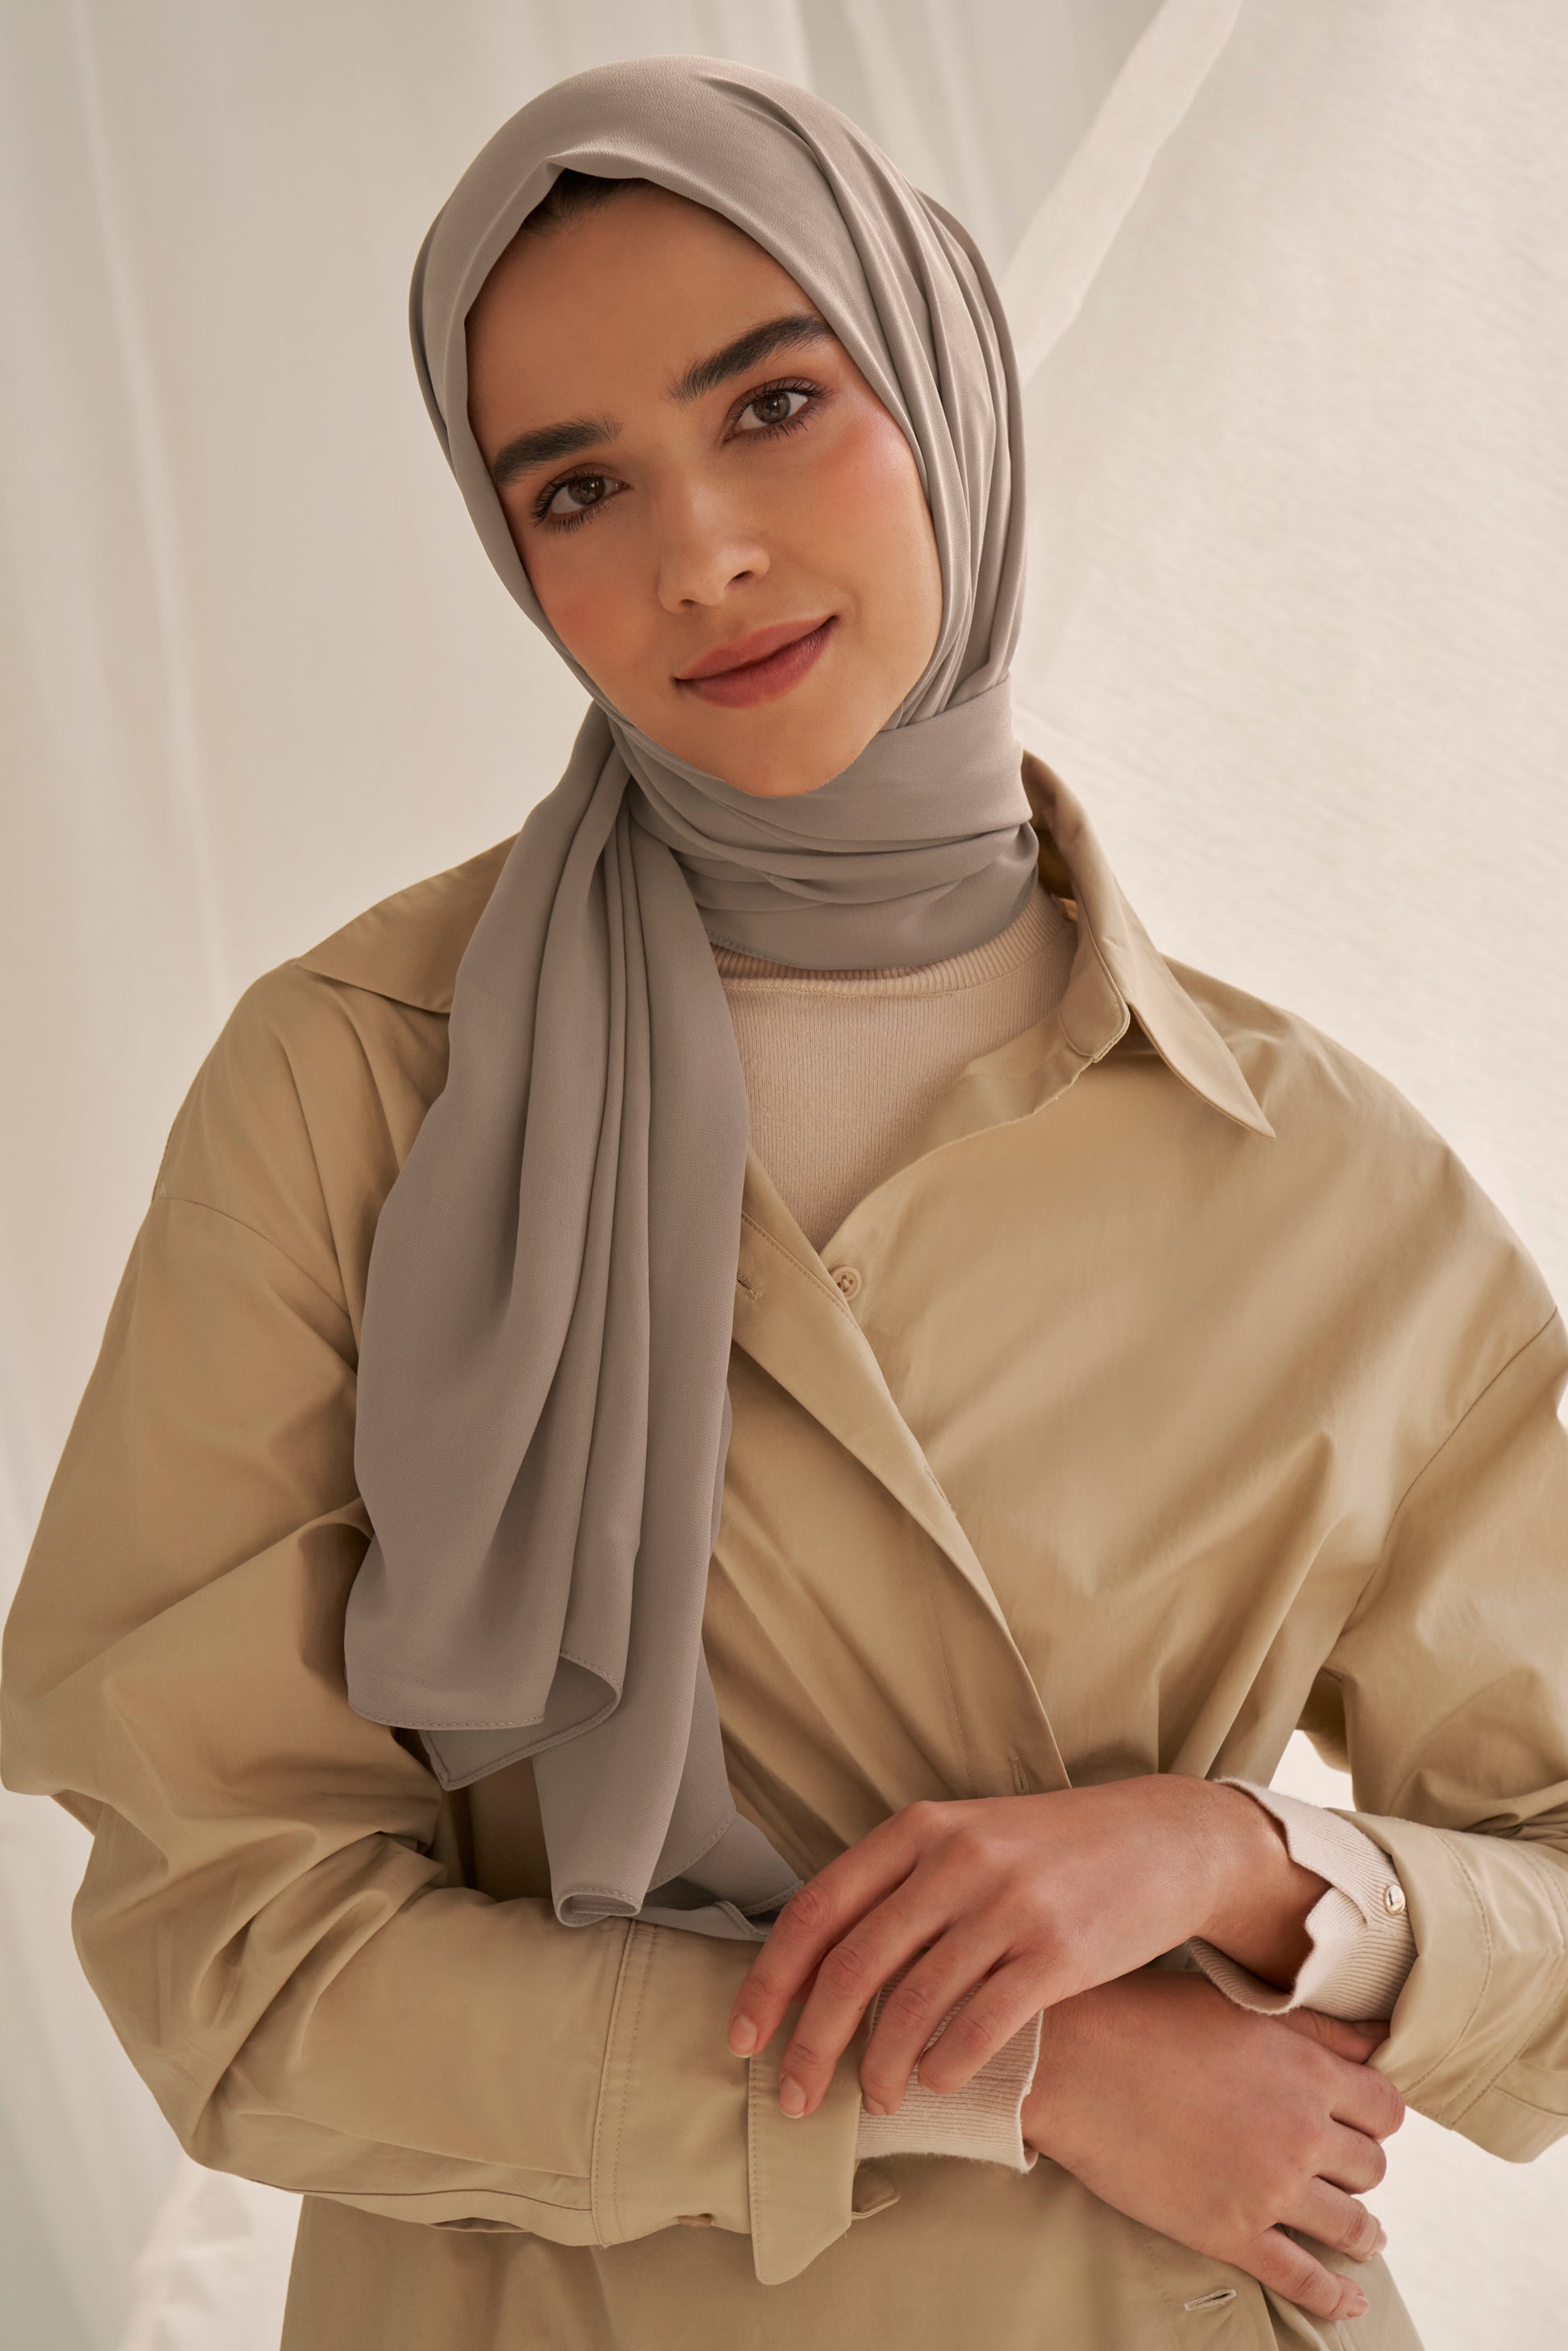 Linen Printed Scarf - Black - SuZain Hijabs